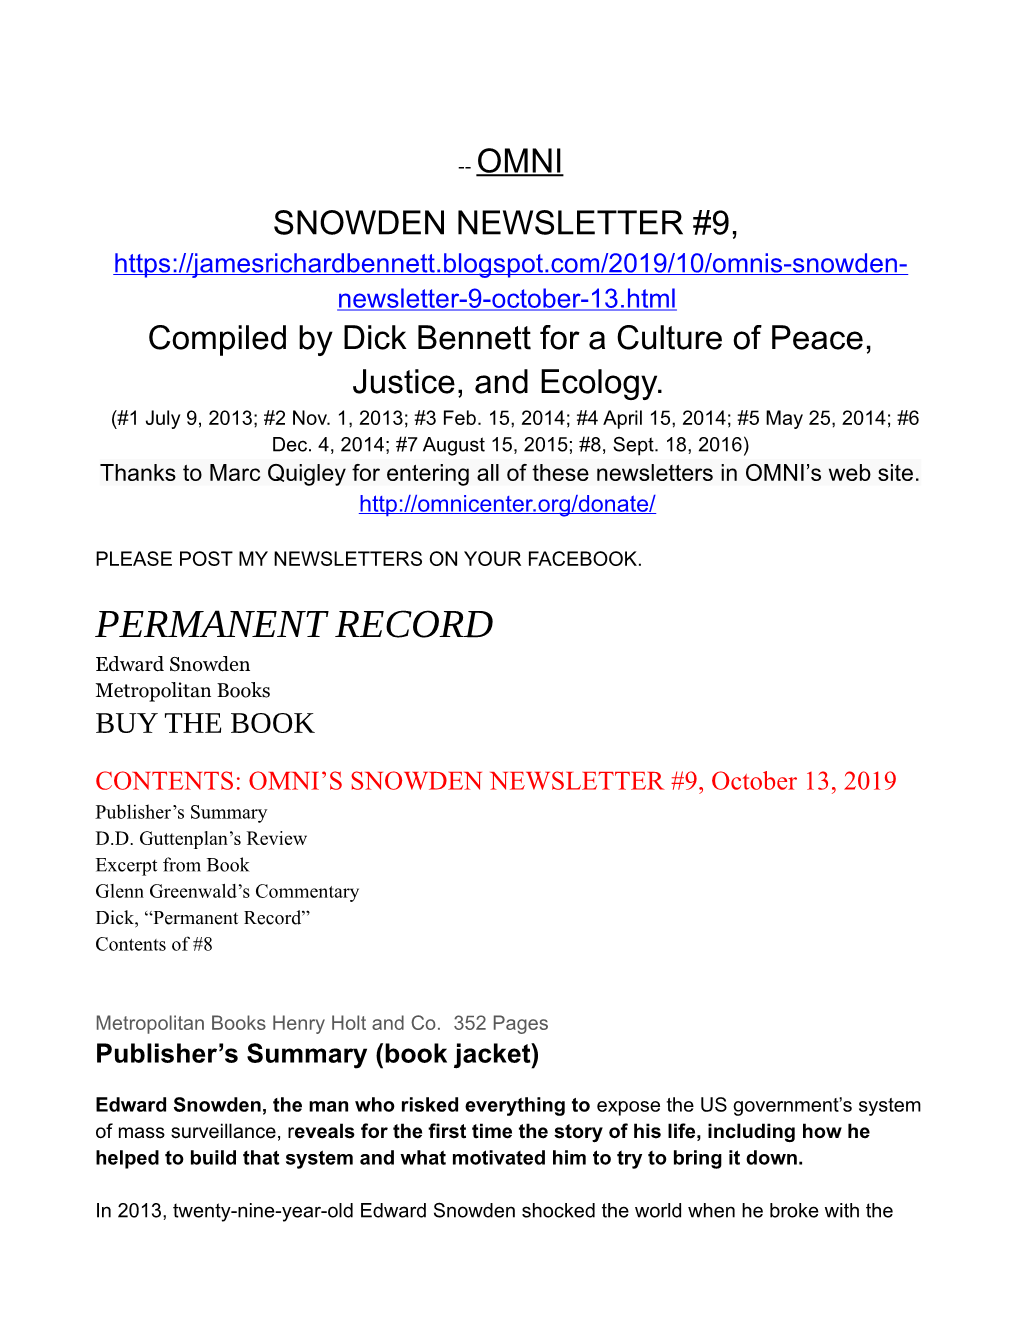 SNOWDEN NEWSLETTER #9, October 13, 2019 Publisher’S Summary D.D